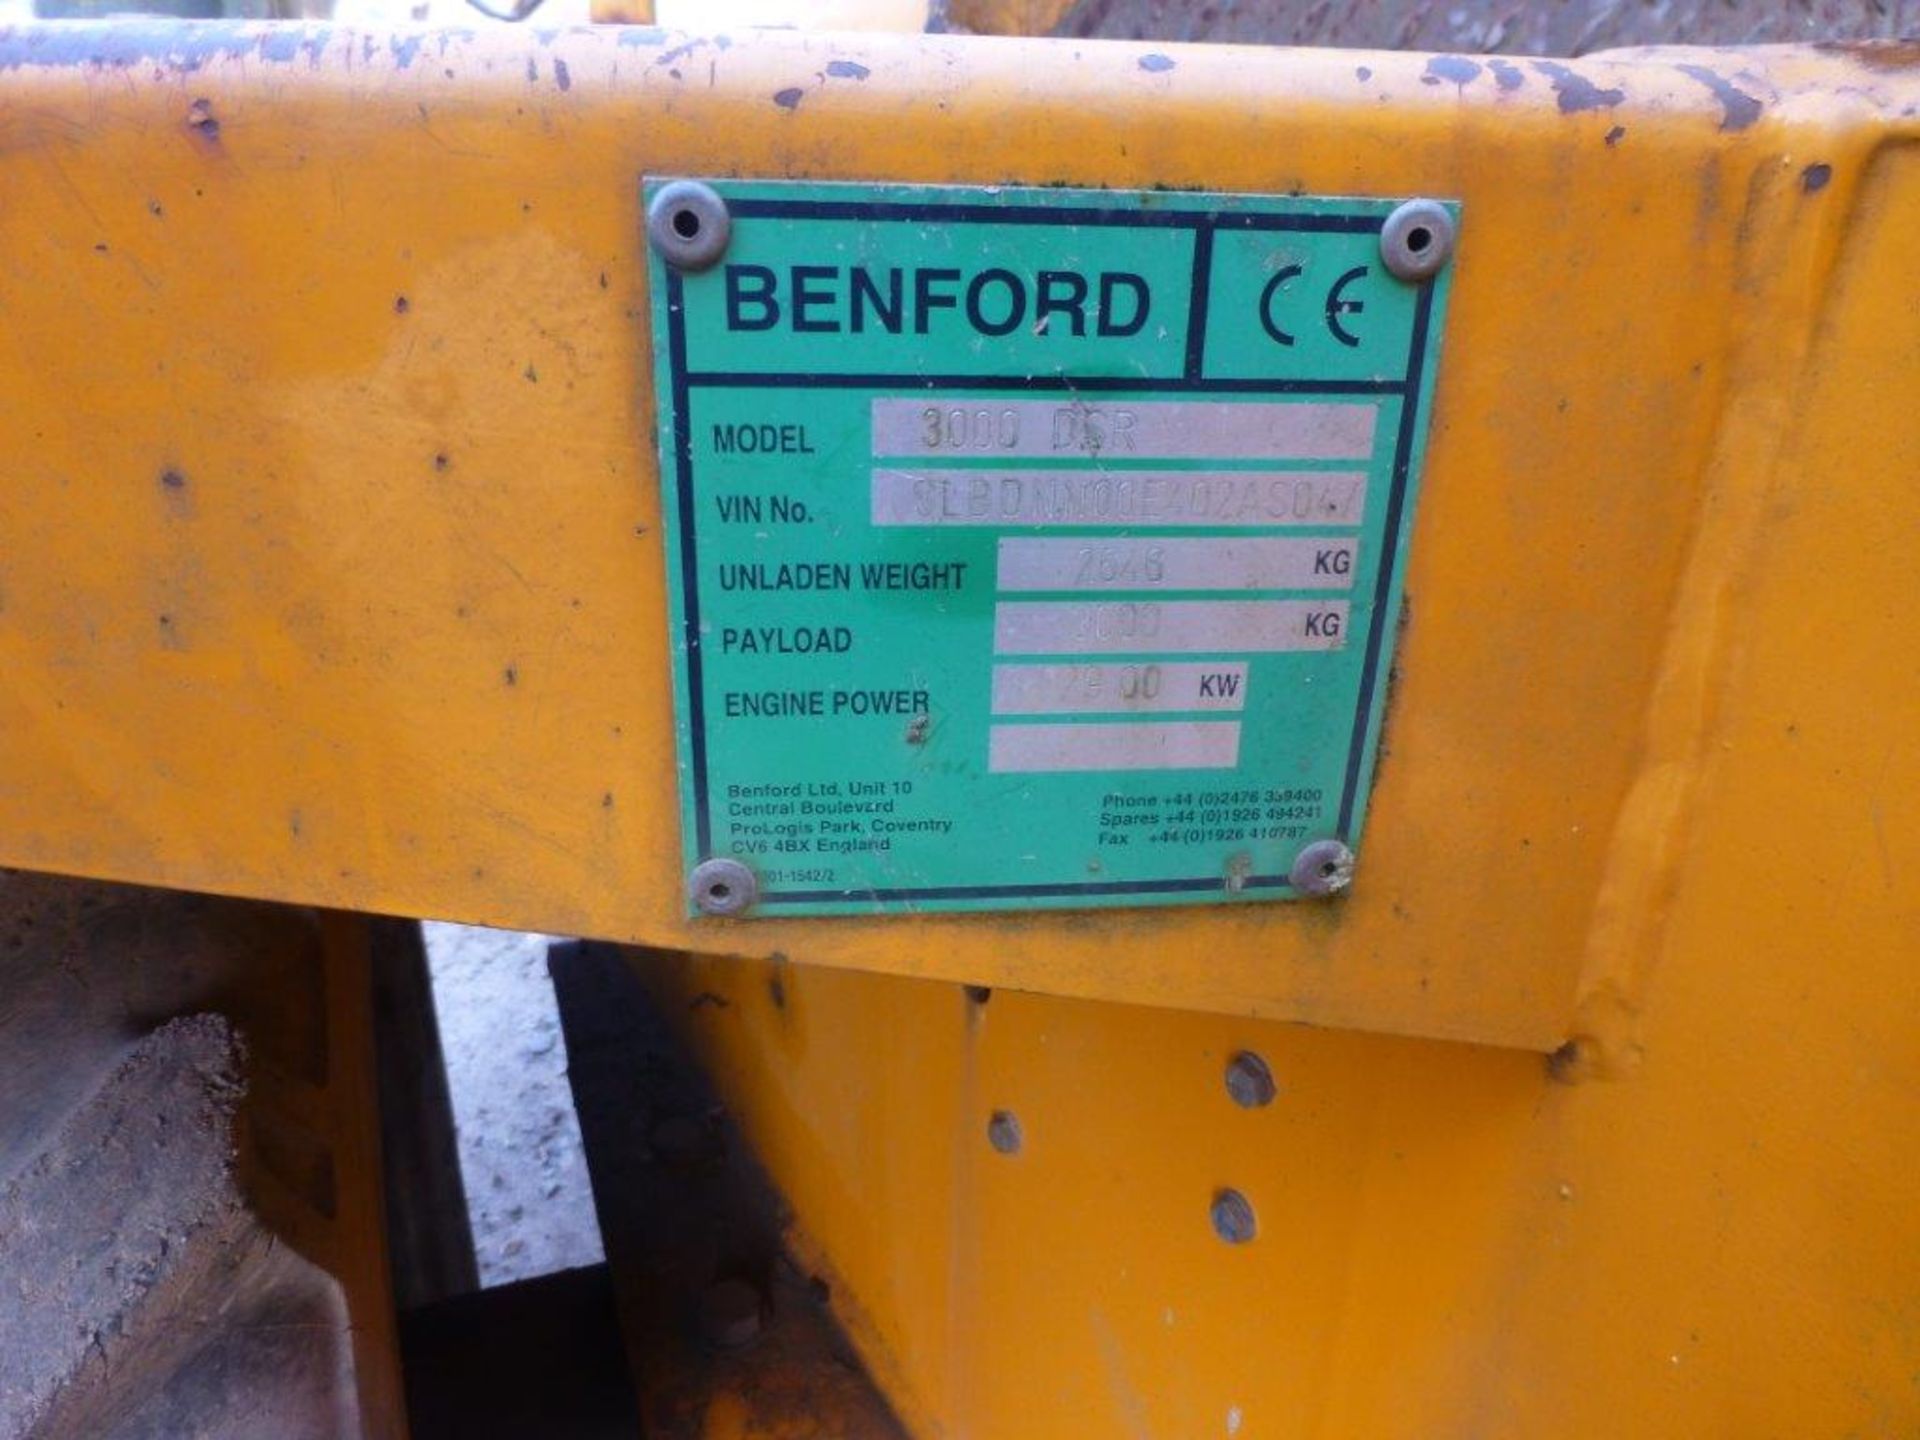 Benford 3000 DSR 3-tonne 4x4 articulated dumper (2004), indicated hours 912.4, weight 2646Kg, VIN - Image 5 of 5